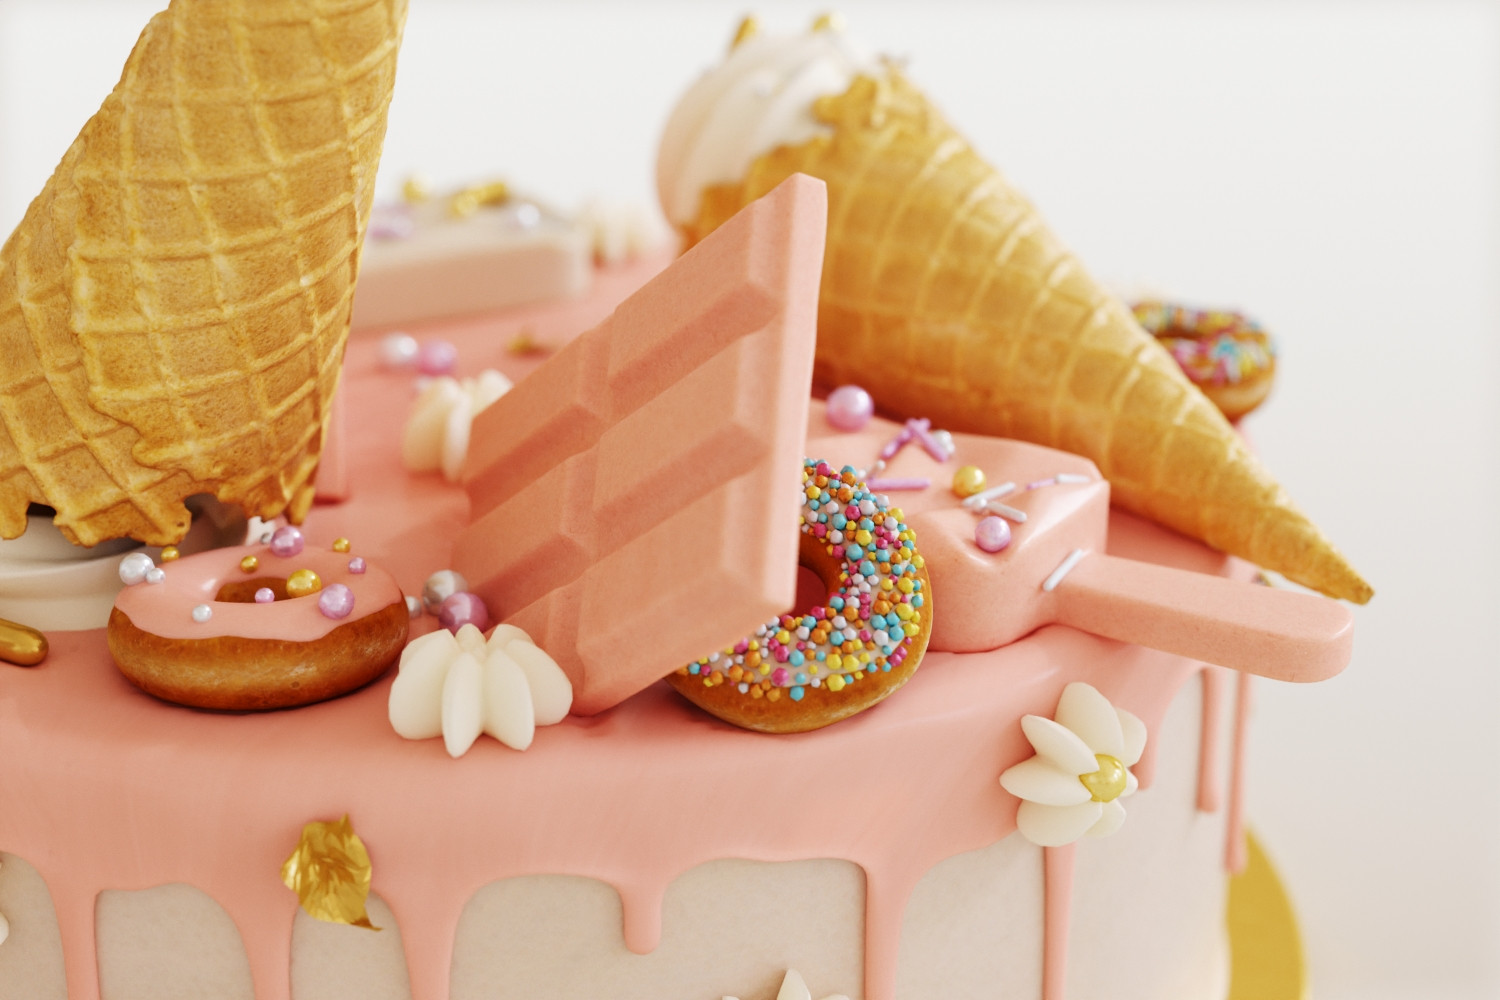 pink cream cake short video large sponge contore cake decorating home made  cake recipe - YouTube